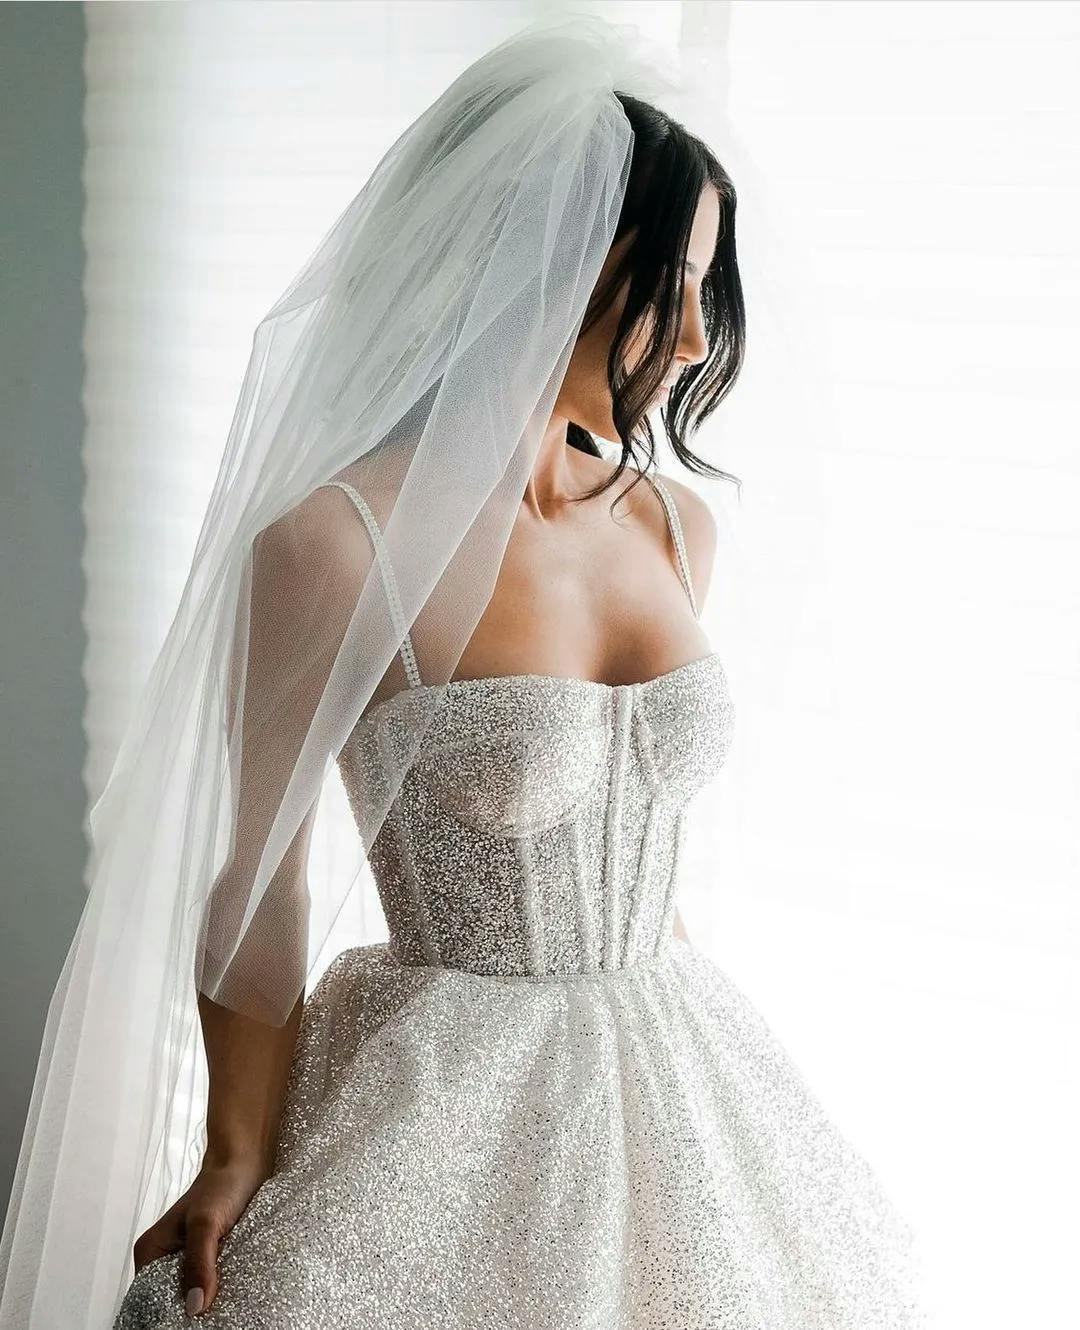 Bride wearing dress wiht corset and veil